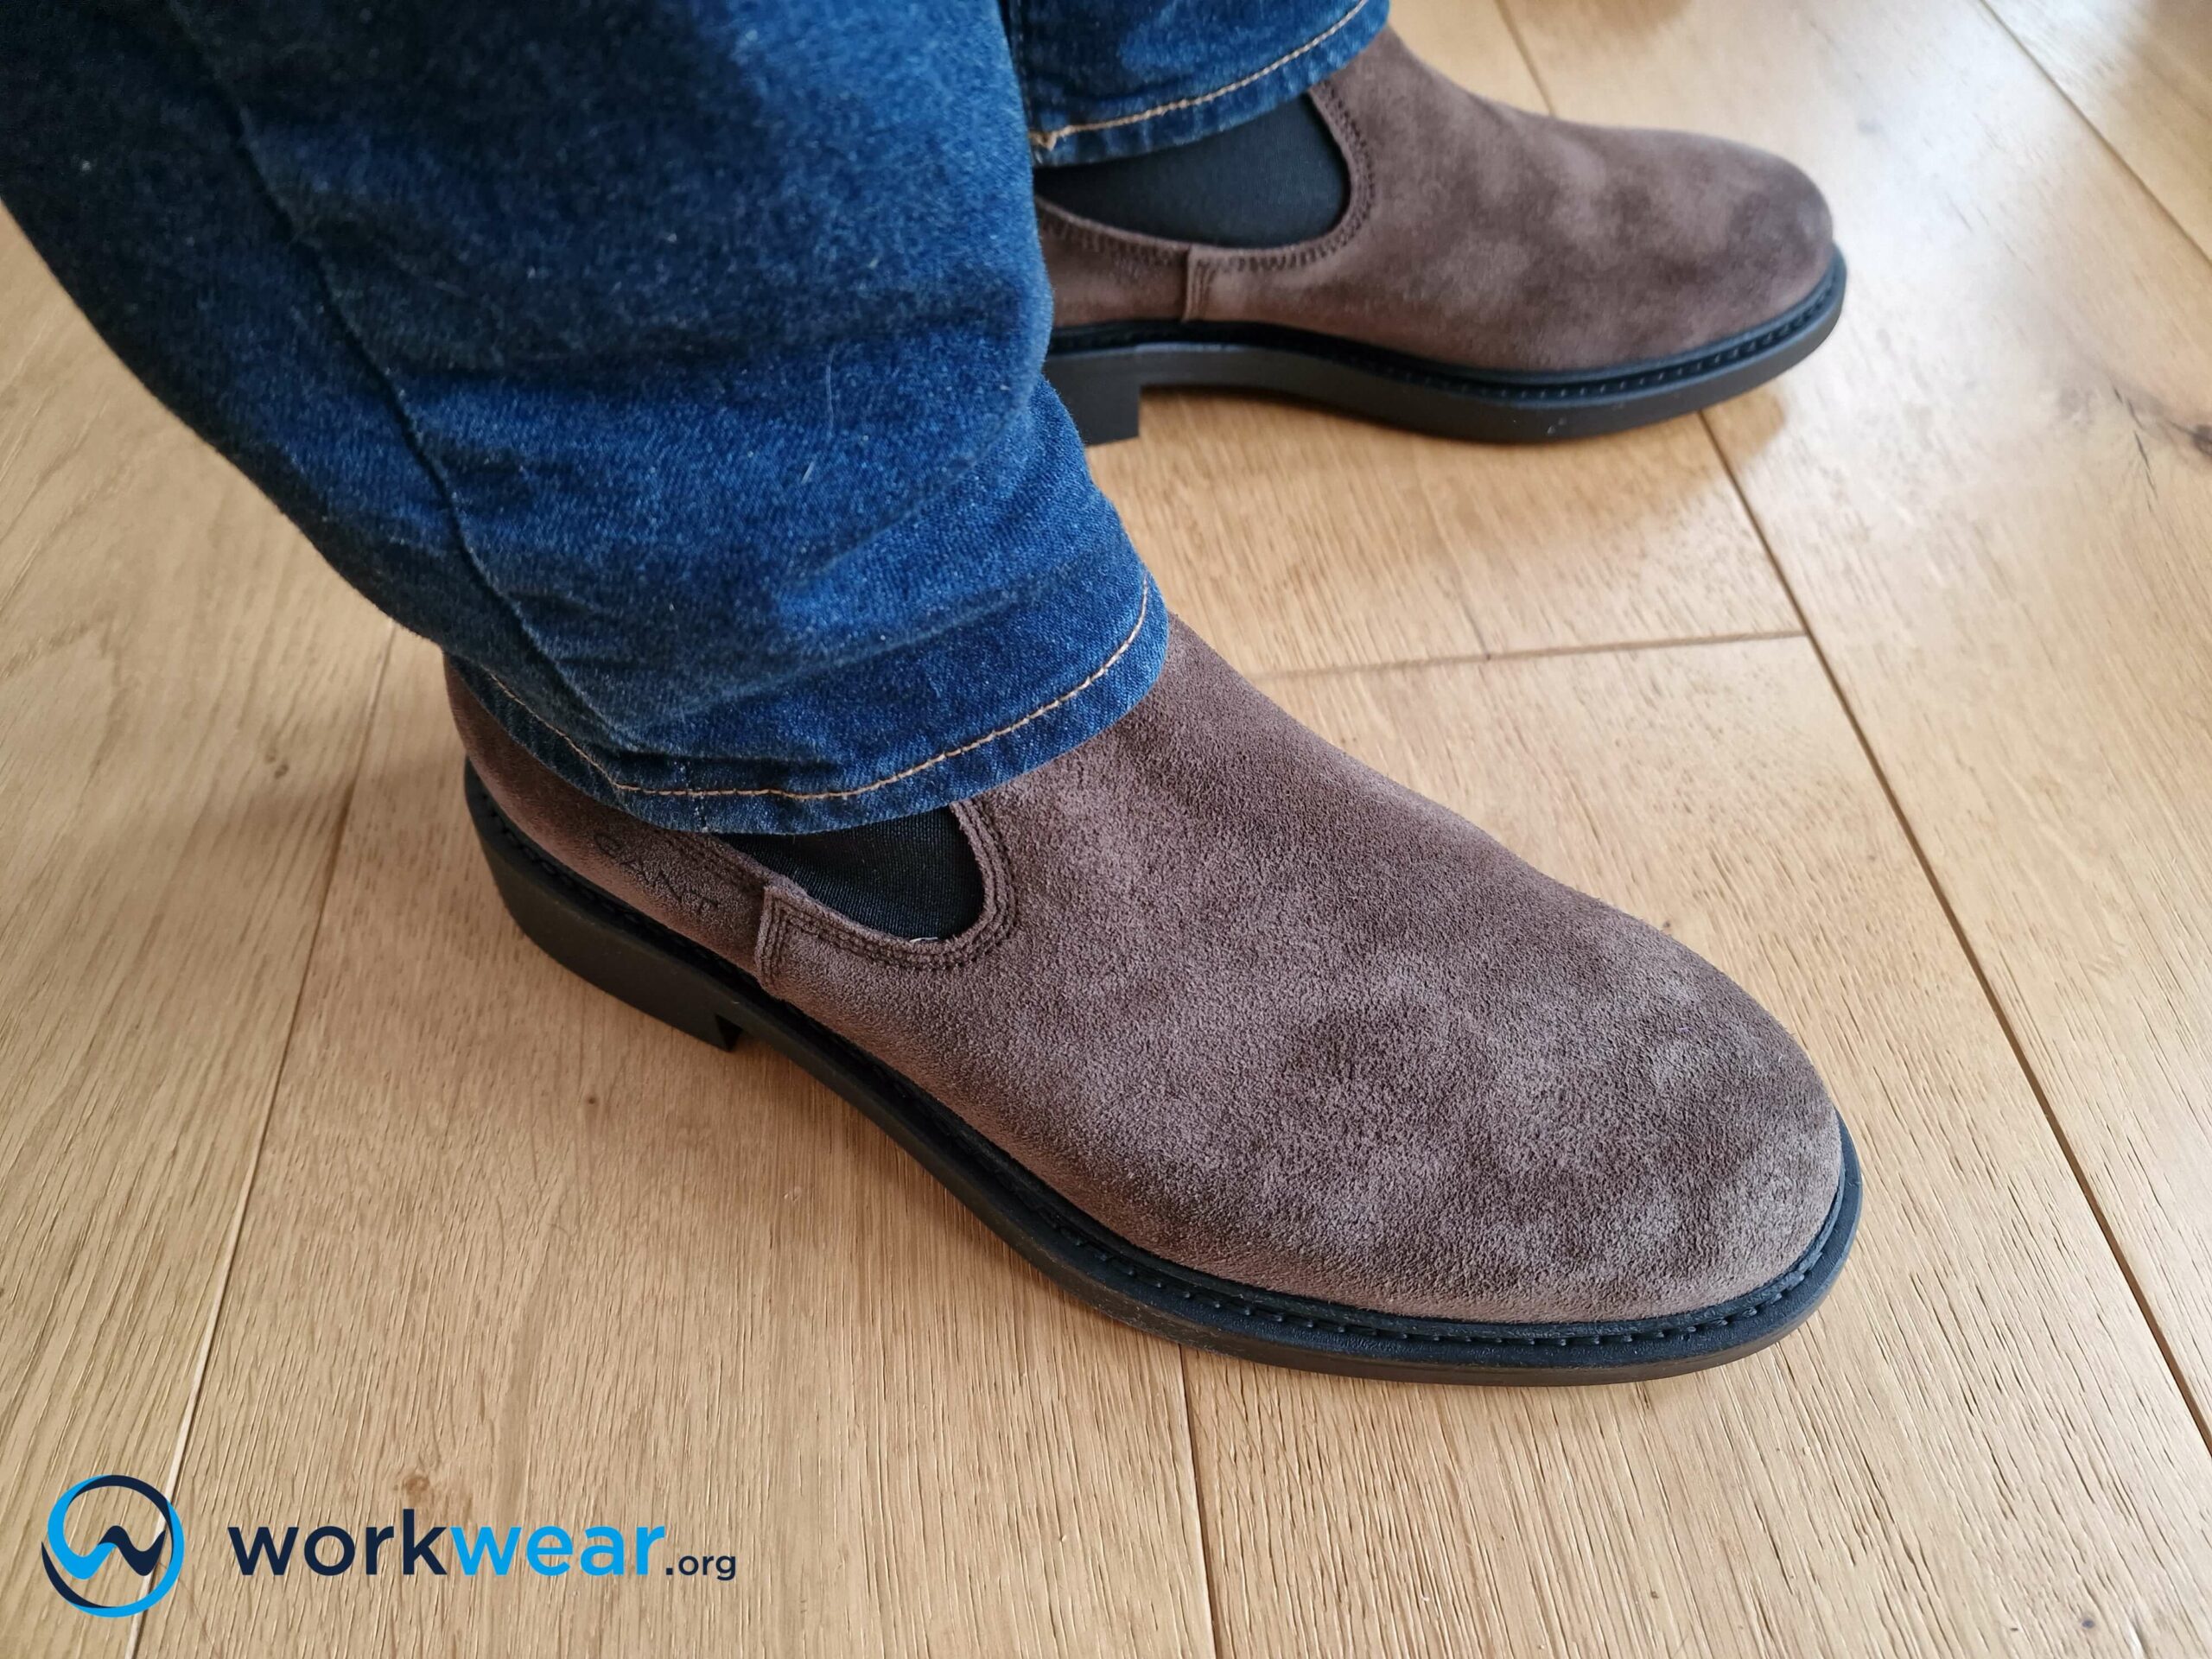 Af storm Land behagelig Gant Millbro Chelsea Boots Worn, Evaluated and Reviewed | WorkWear.org